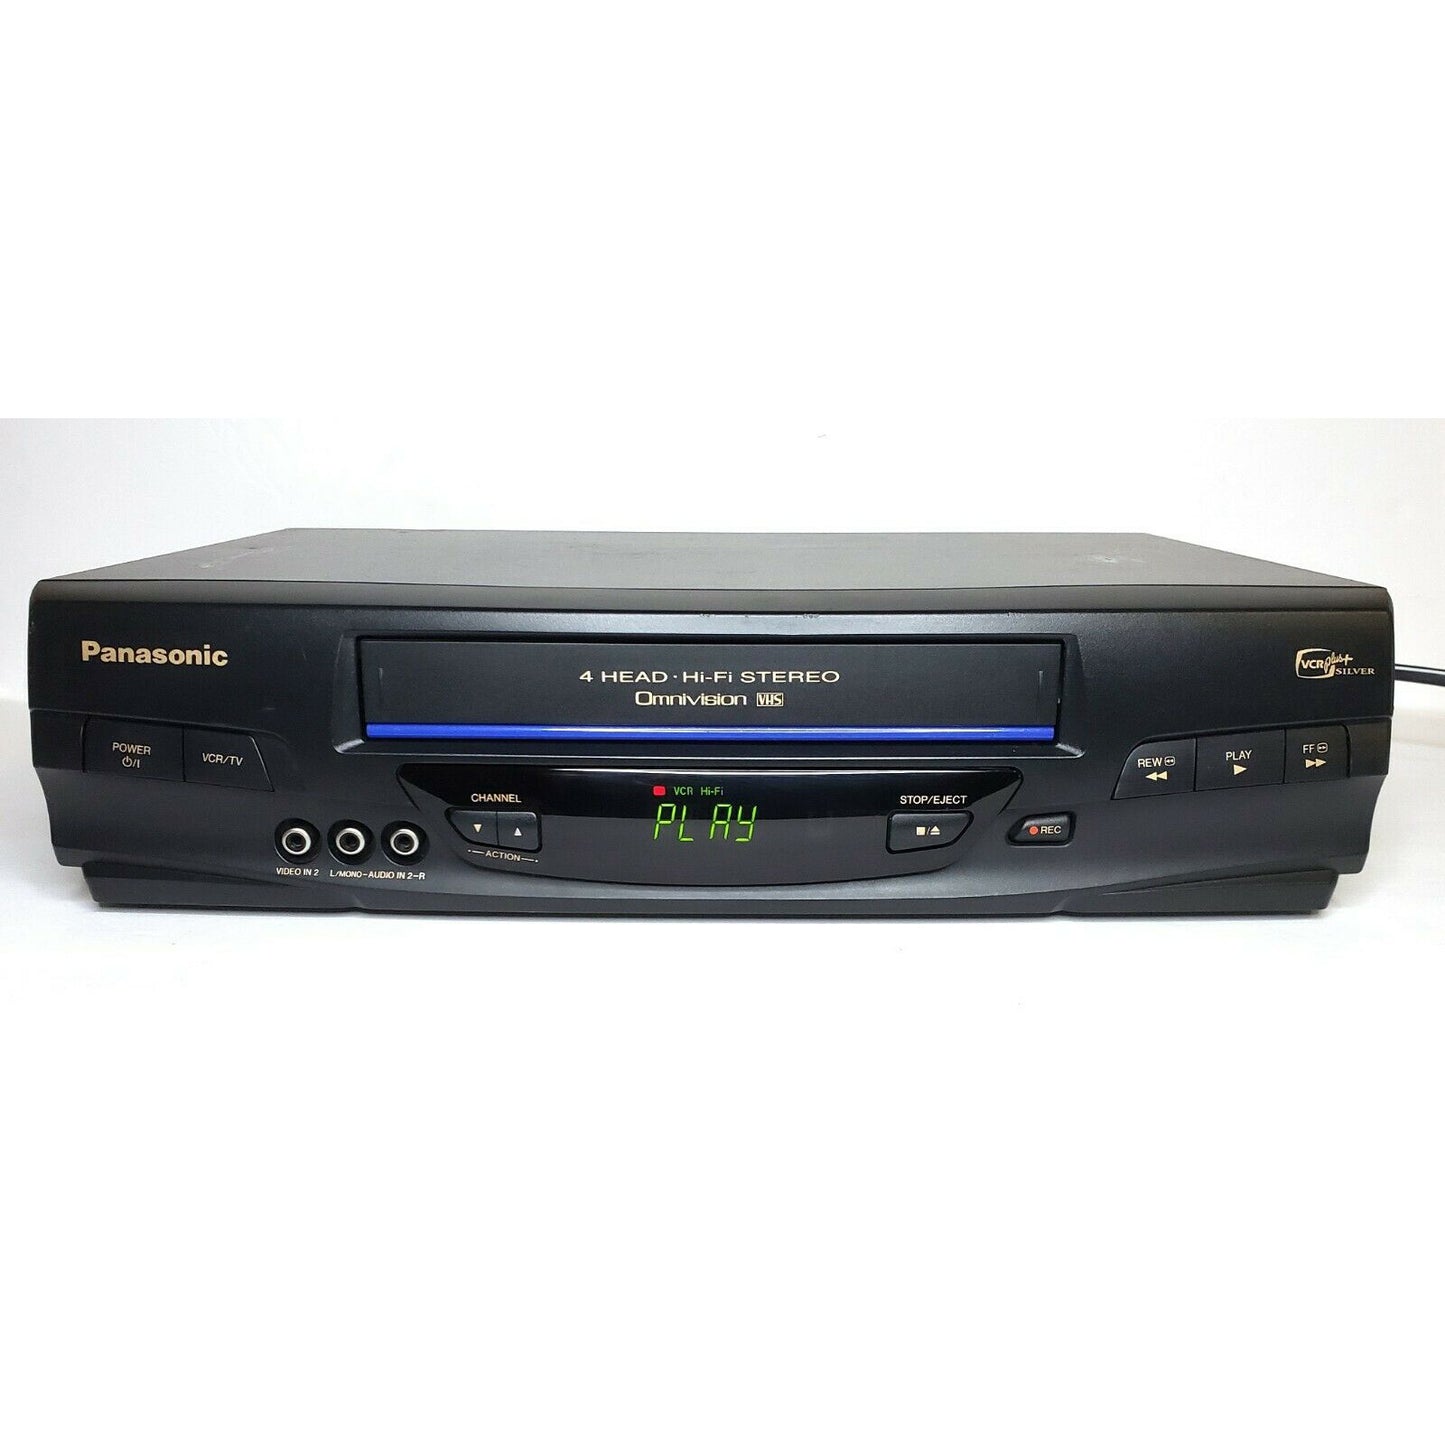 Panasonic PV-V4540 Omnivision VCR, 4-Head Hi-Fi Stereo - Front